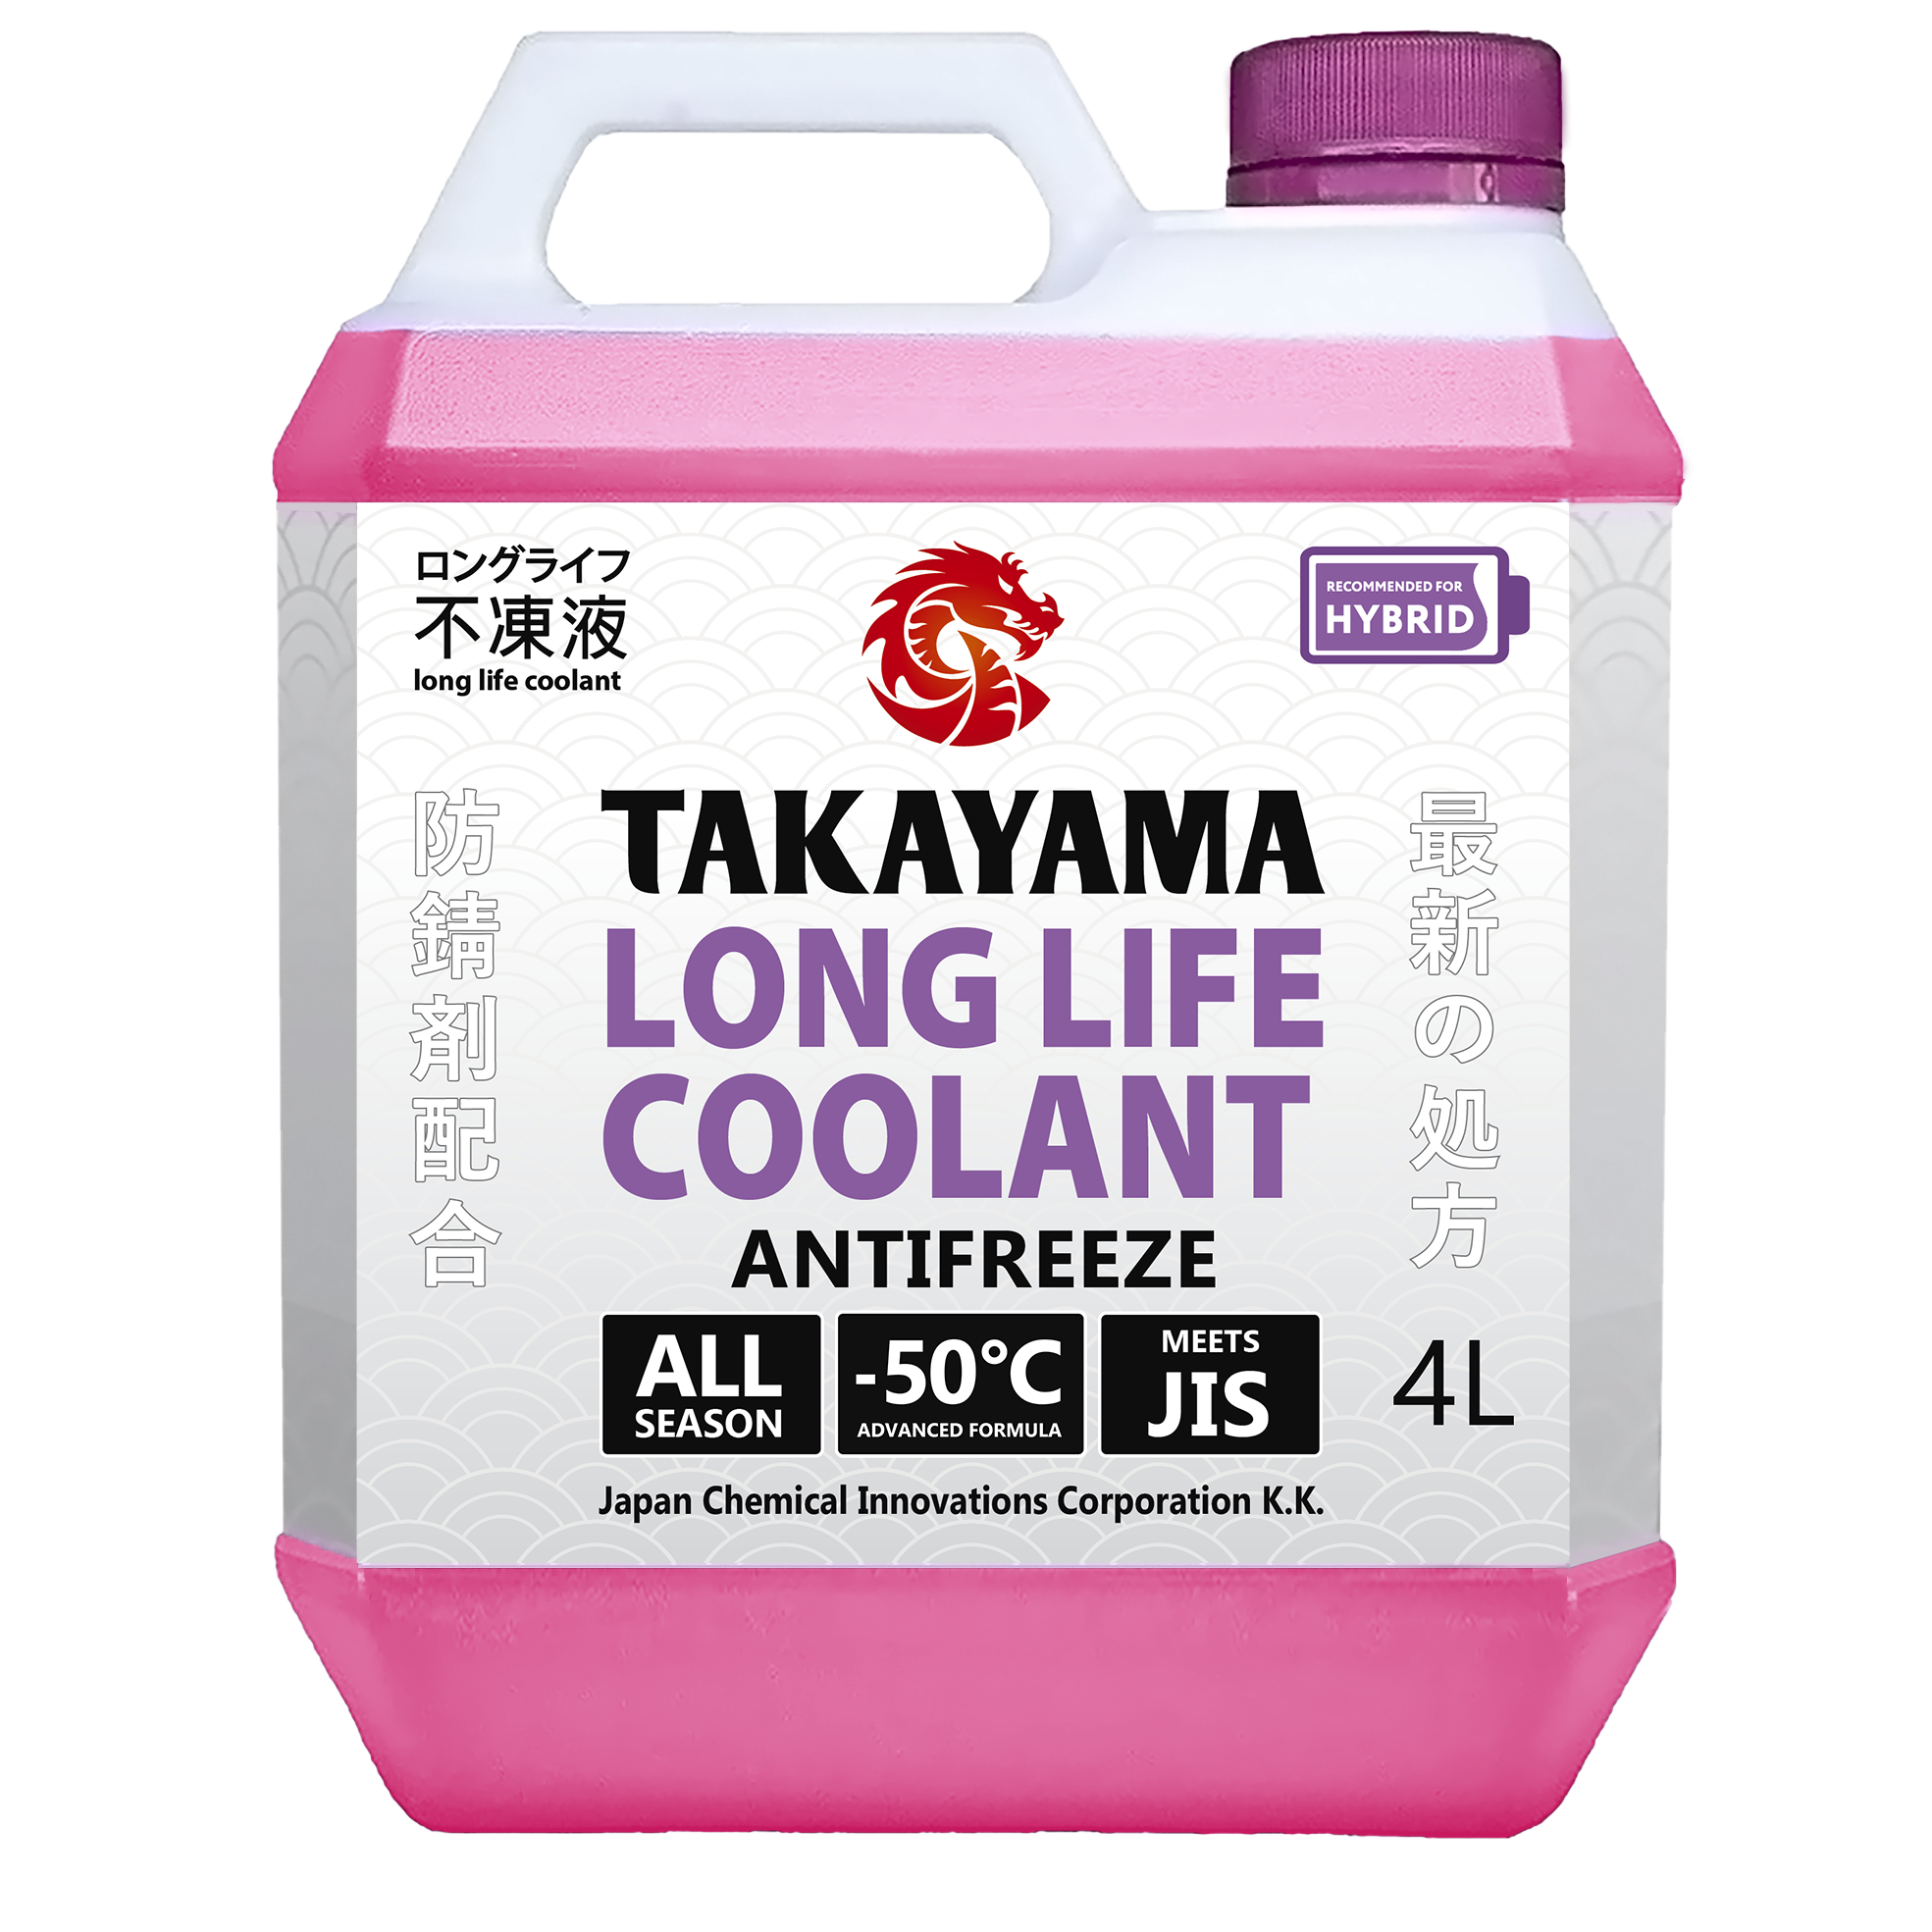 Антифриз TAKAYAMA LONG LIFE COOLANT HYBRID (-50) розовый 4 л